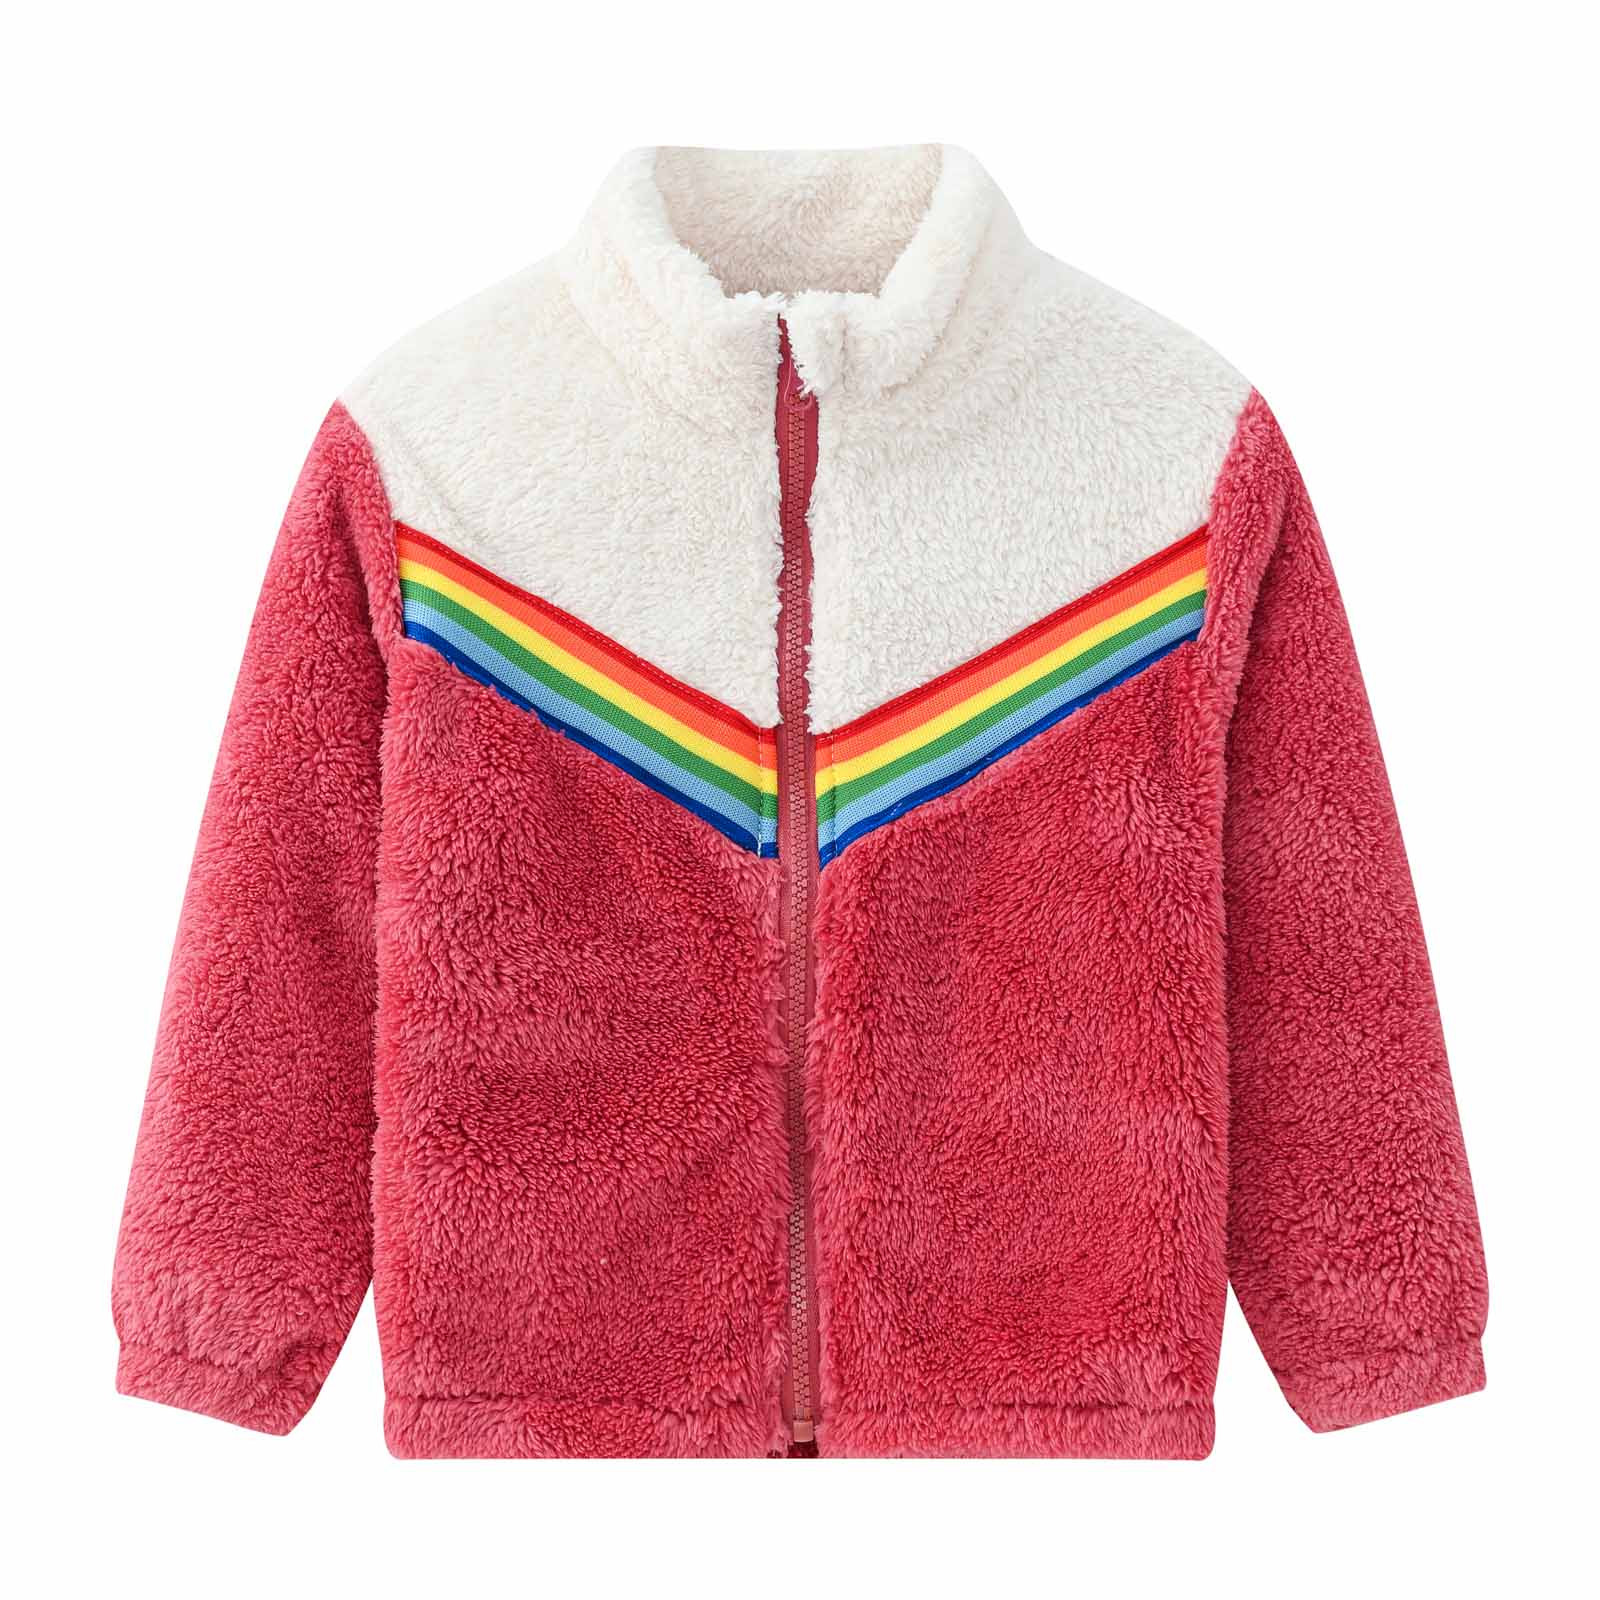 YYDGH Girls Zipper Jacket Fuzzy Sweatshirt Long Sleeve Casual Cozy Fleece Sherpa Outwear Coat Full-Zip Rainbow Jackets(Red,7-8 Years) - image 1 of 8